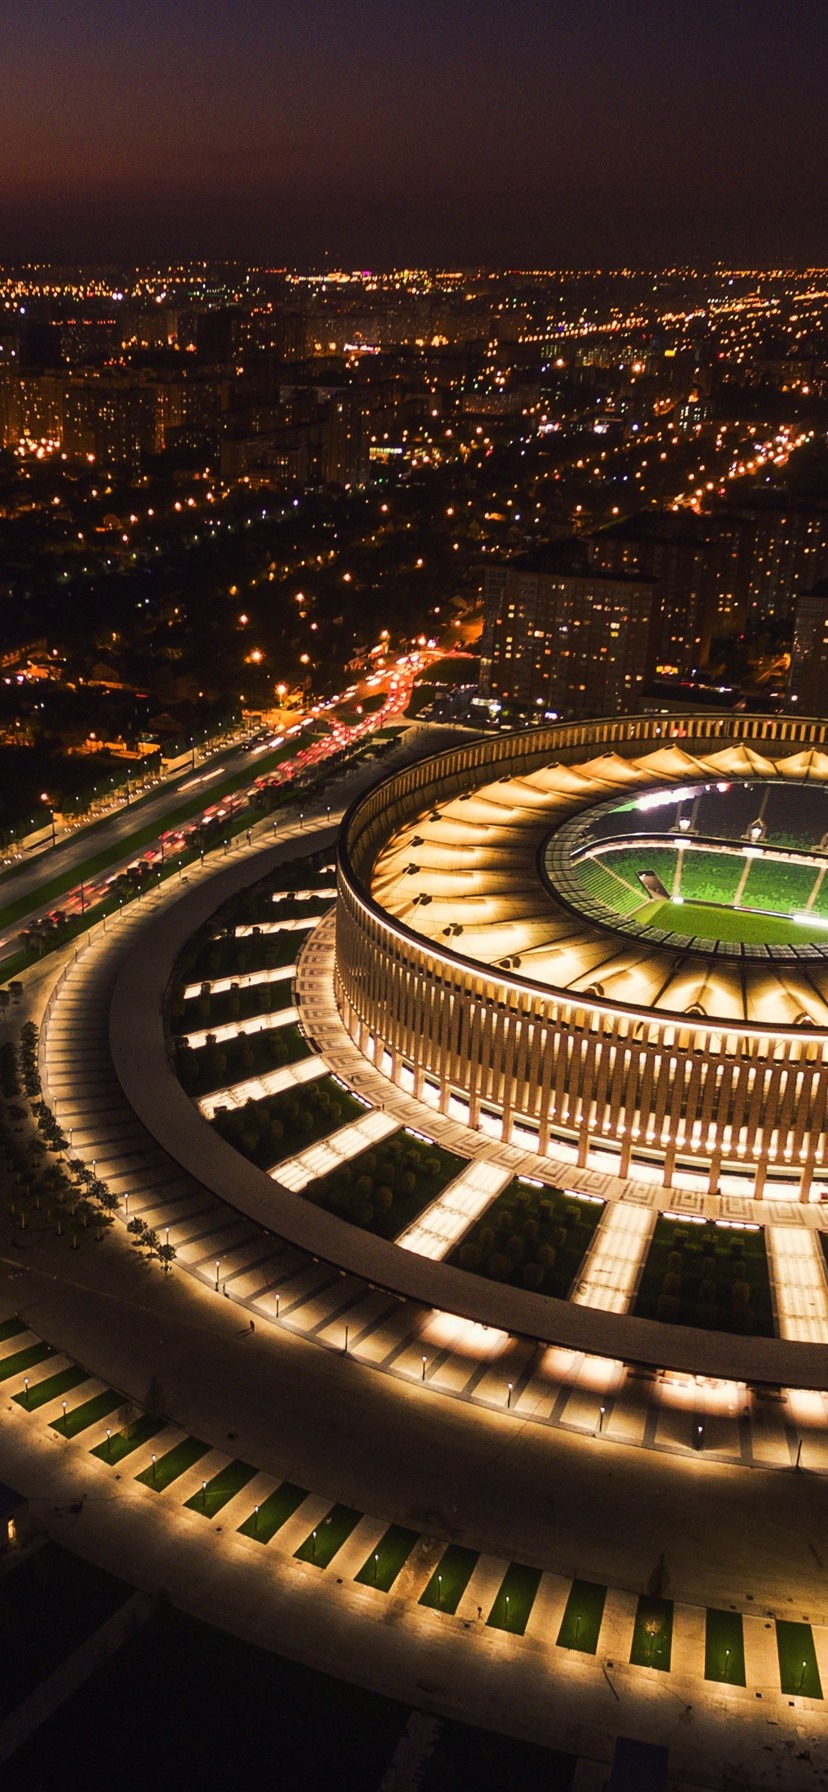 Russia, Krasnodar, Stadium, Top View, City, Night 1080x1920 IPhone 8 7 6 6S Plus Wallpaper, Background, Picture, Image